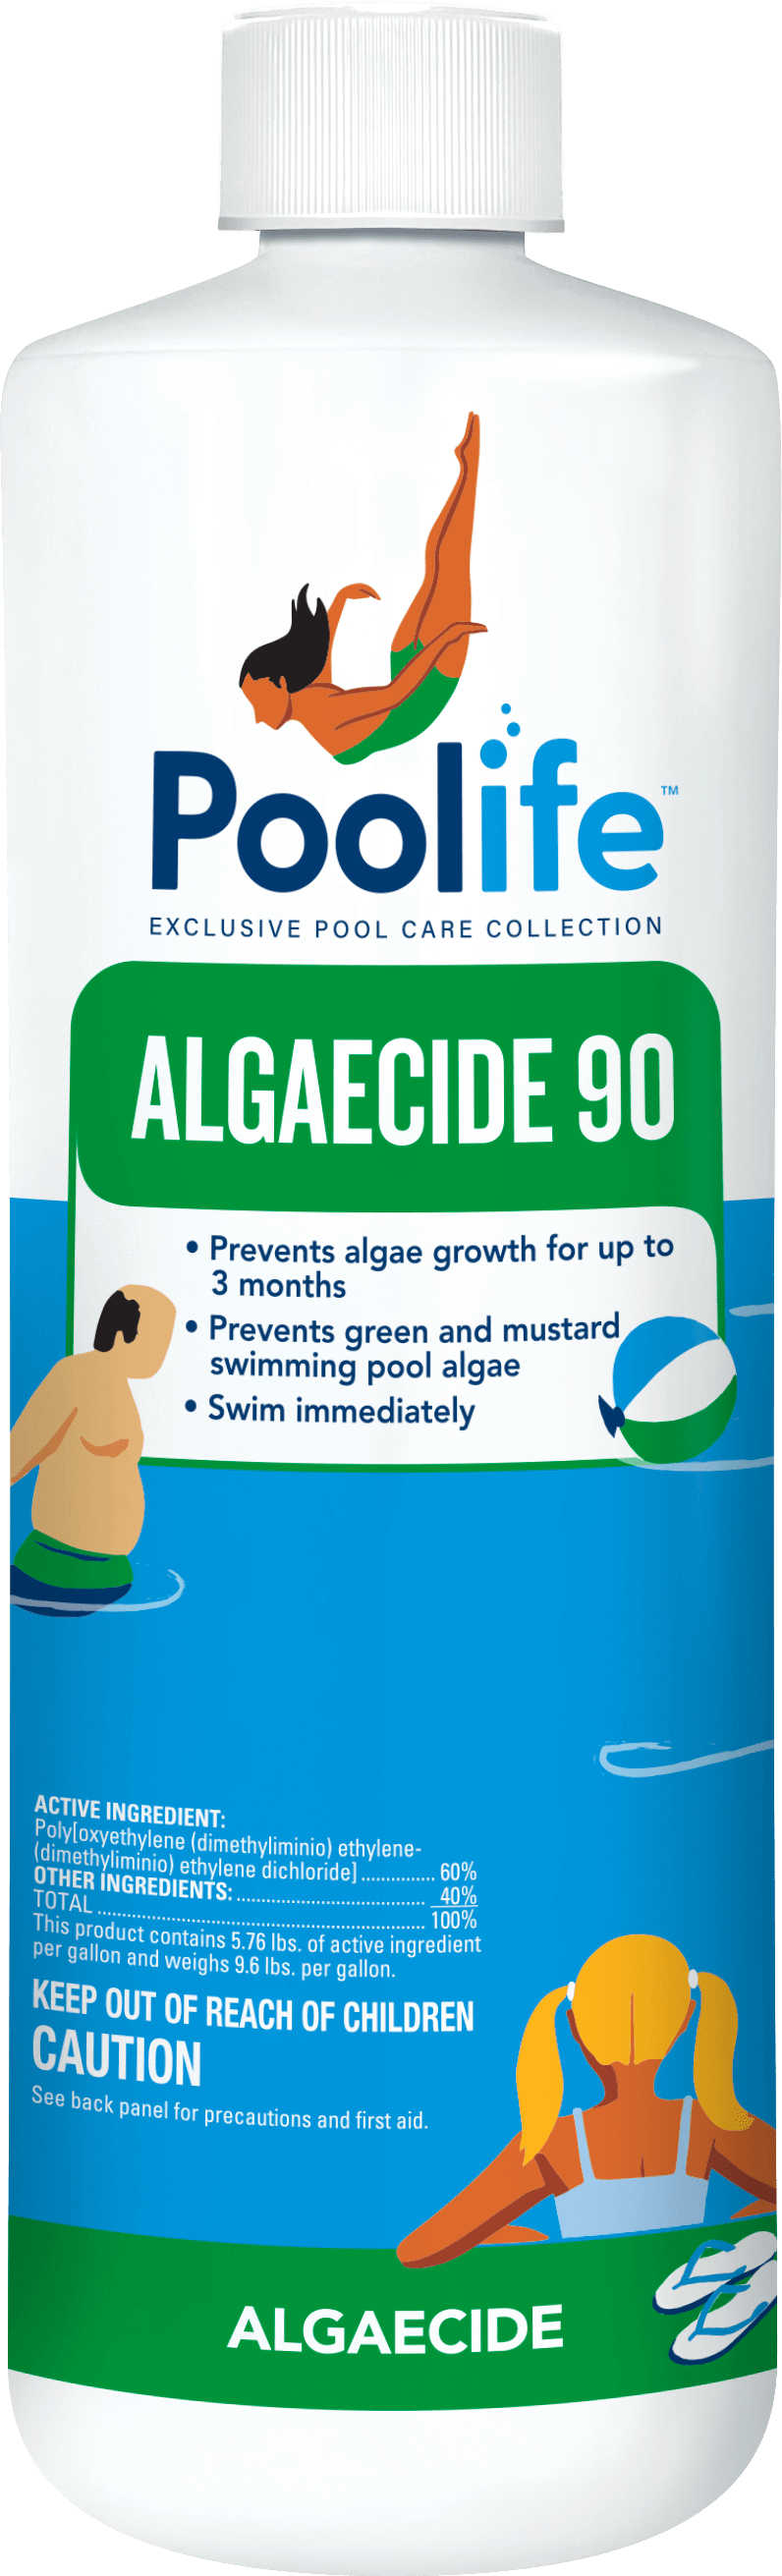 Algaecide 90 Front